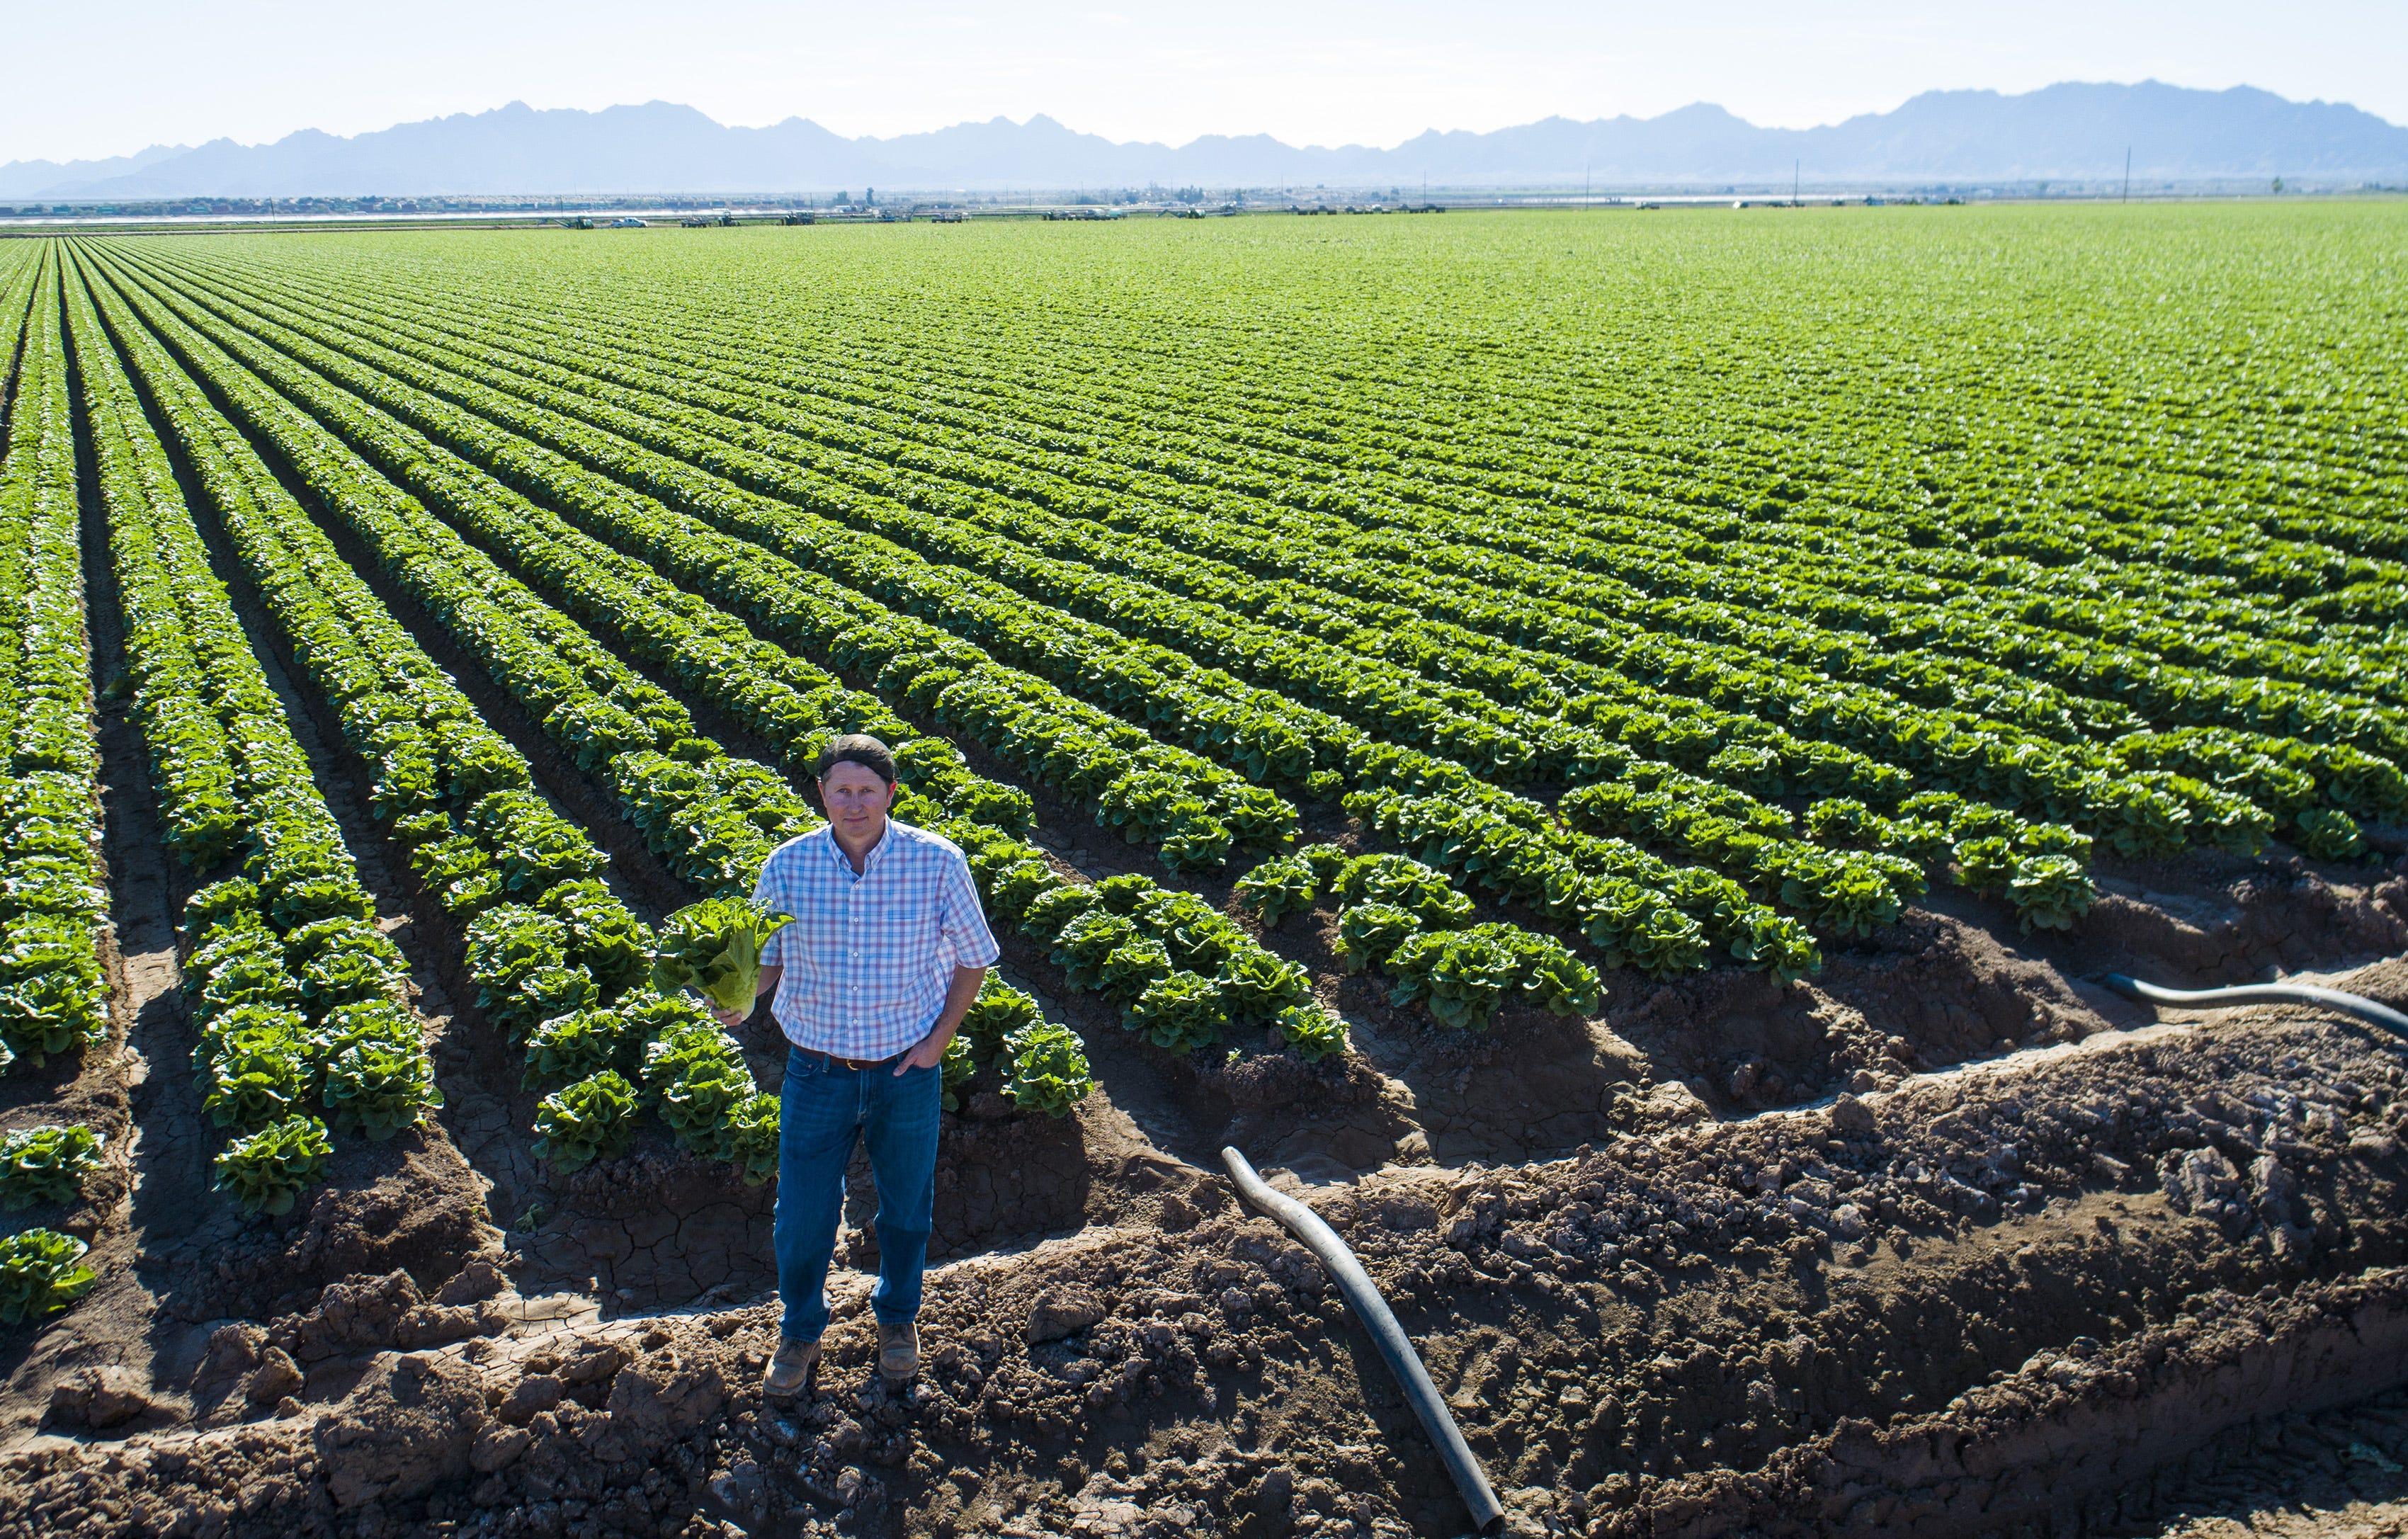 John Boelts, vice president of the Arizona Farm Bureau, says Arizona farms produce 130 million servings of leafy greens every day. "The same lettuce I serve to my customers is the same lettuce I serve to my family."